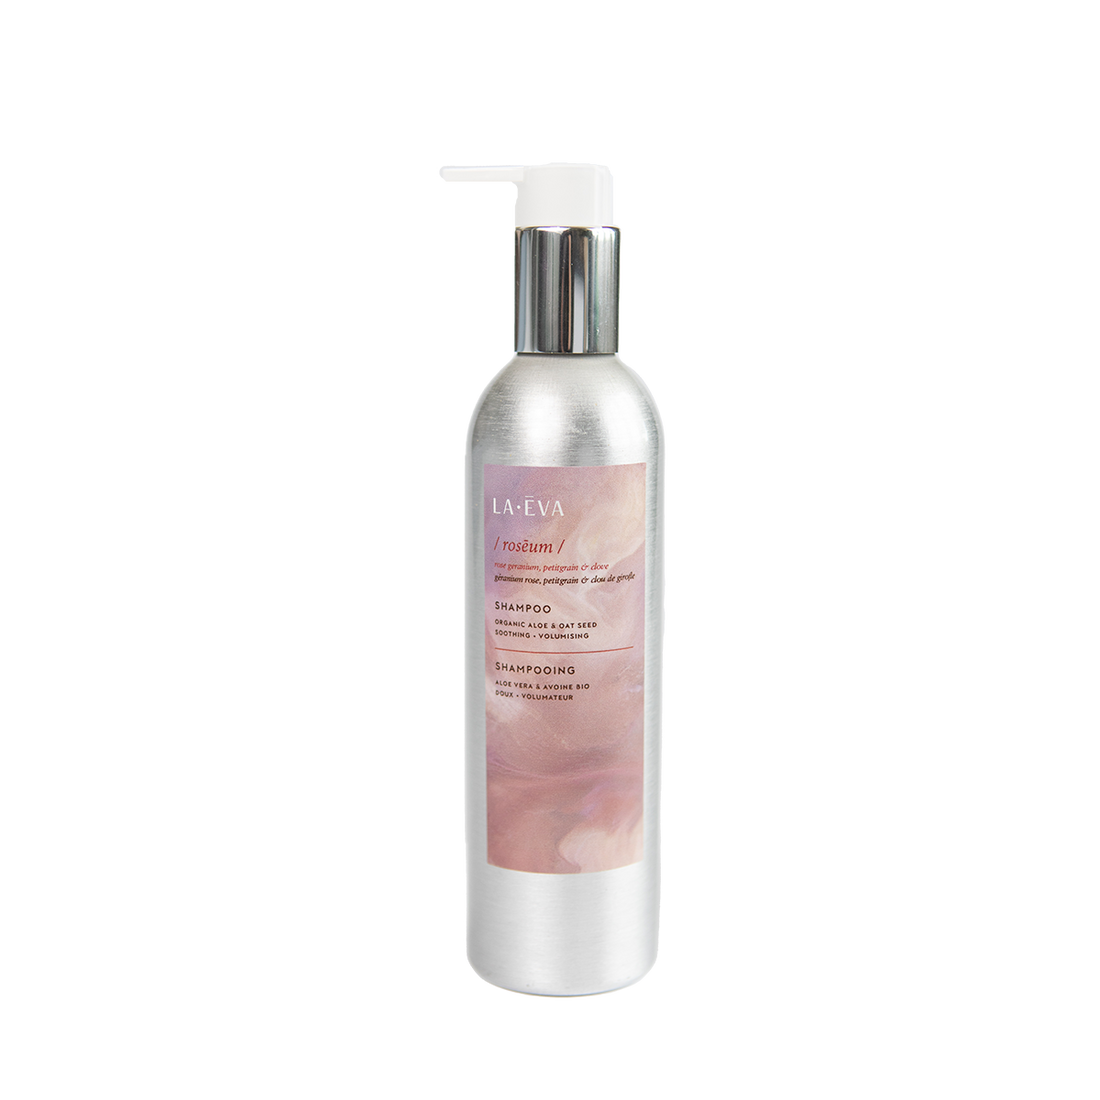 200ml aluminium bottle of La-Eva Roseum shampoo